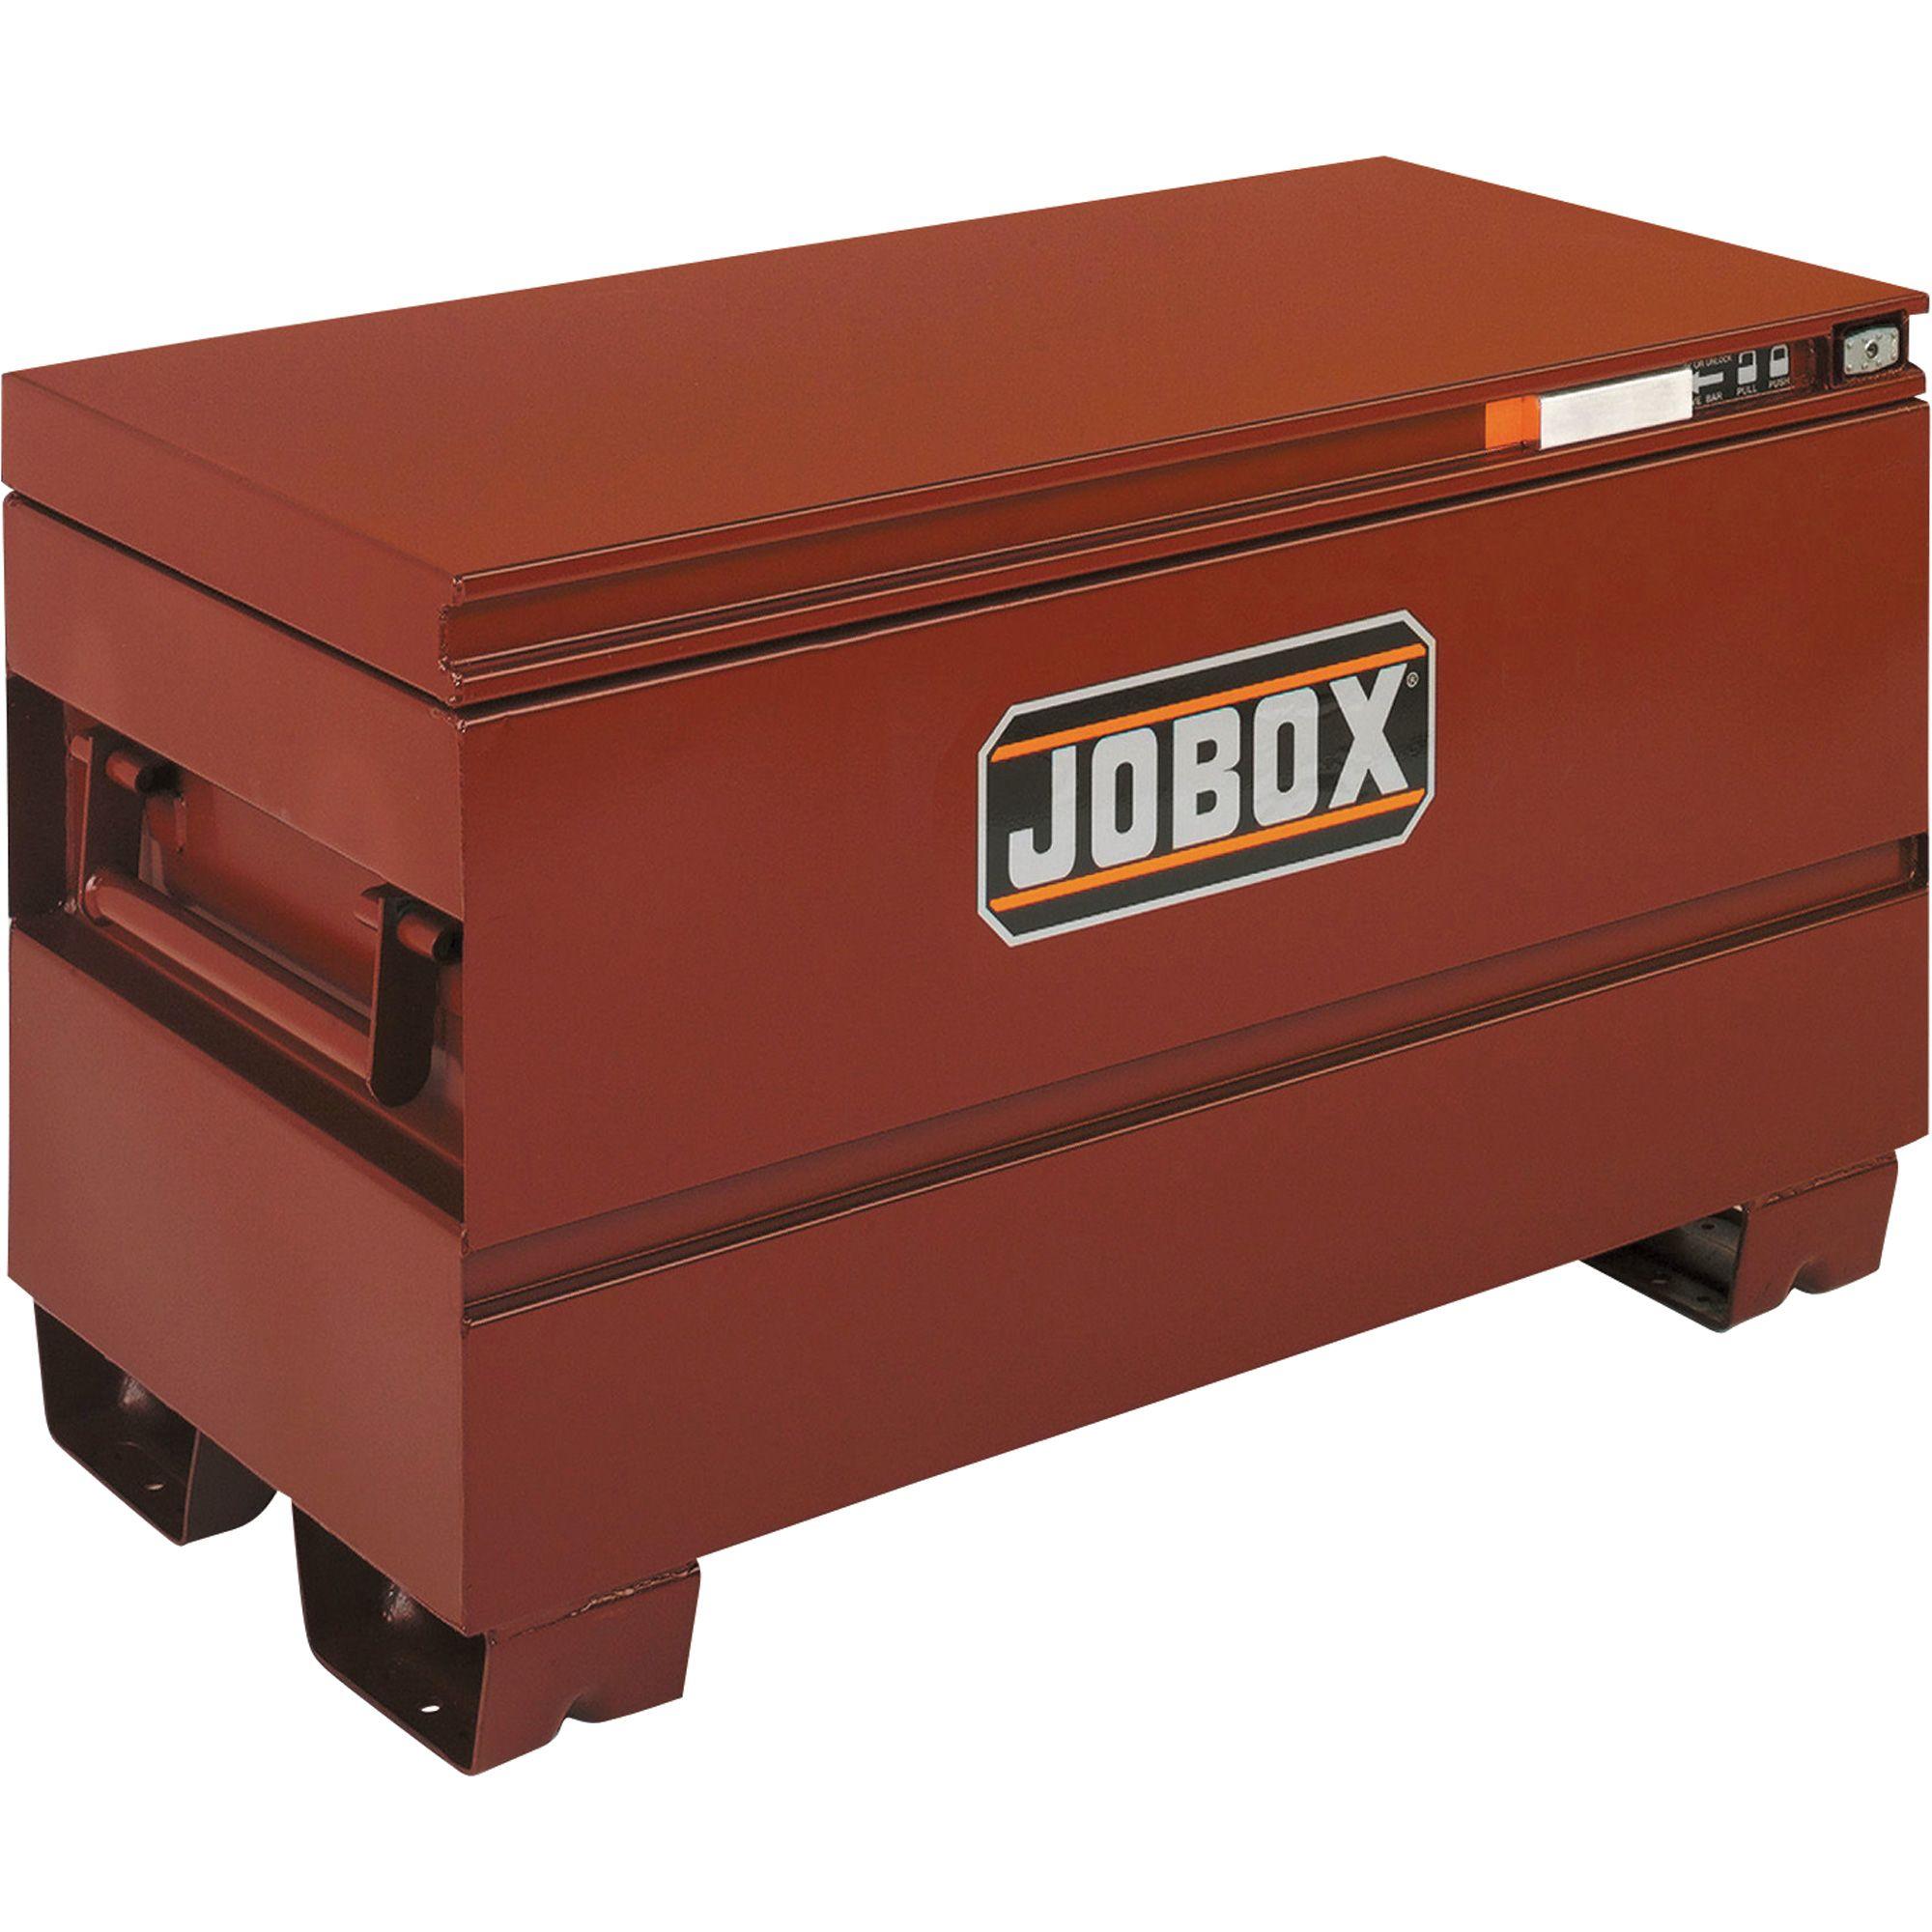 Jobox Logo - Jobox 42in. Heavy-Duty Steel Chest — Site-Vault Security System ...